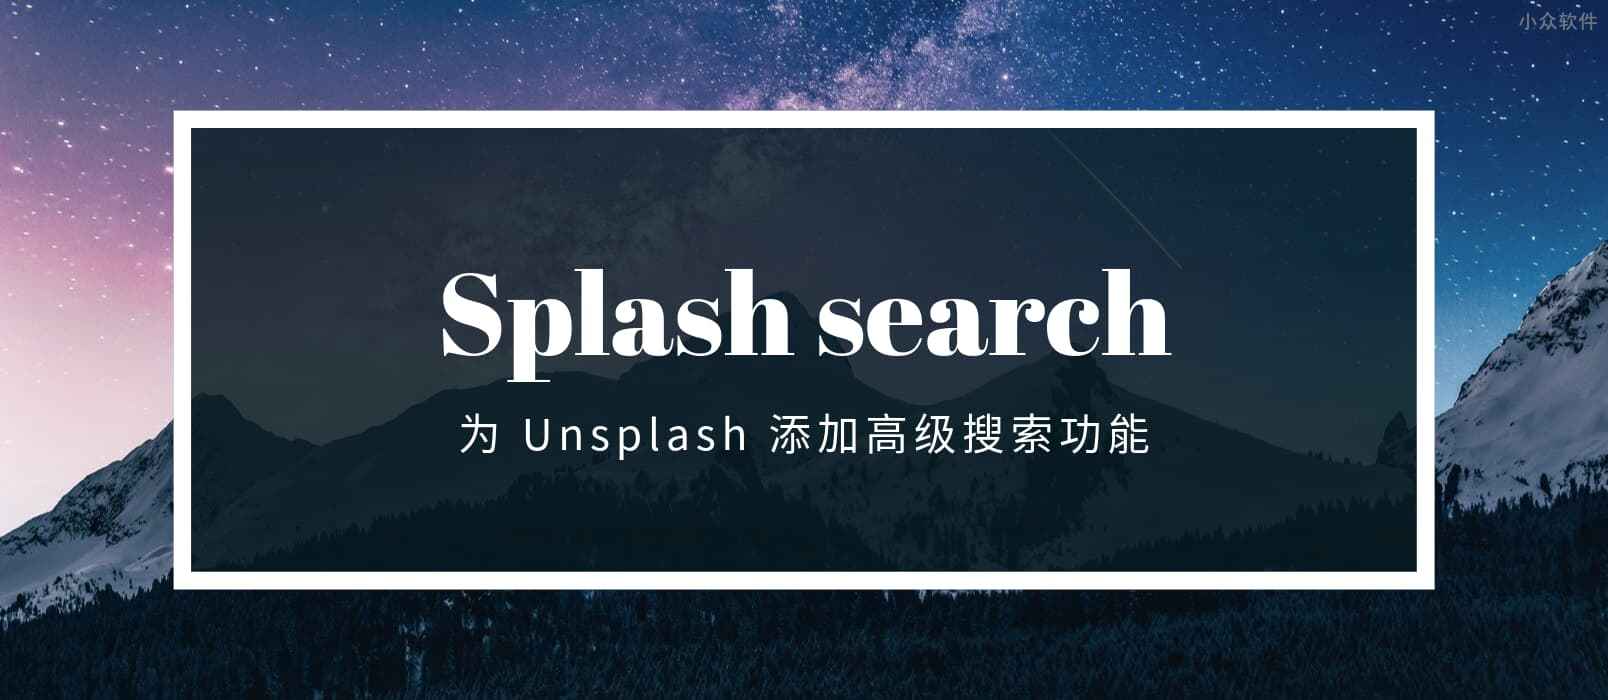 Splash search - Unsplash 高级搜索扩展，可根据方向、颜色、亮度过滤结果[Chrome] 1